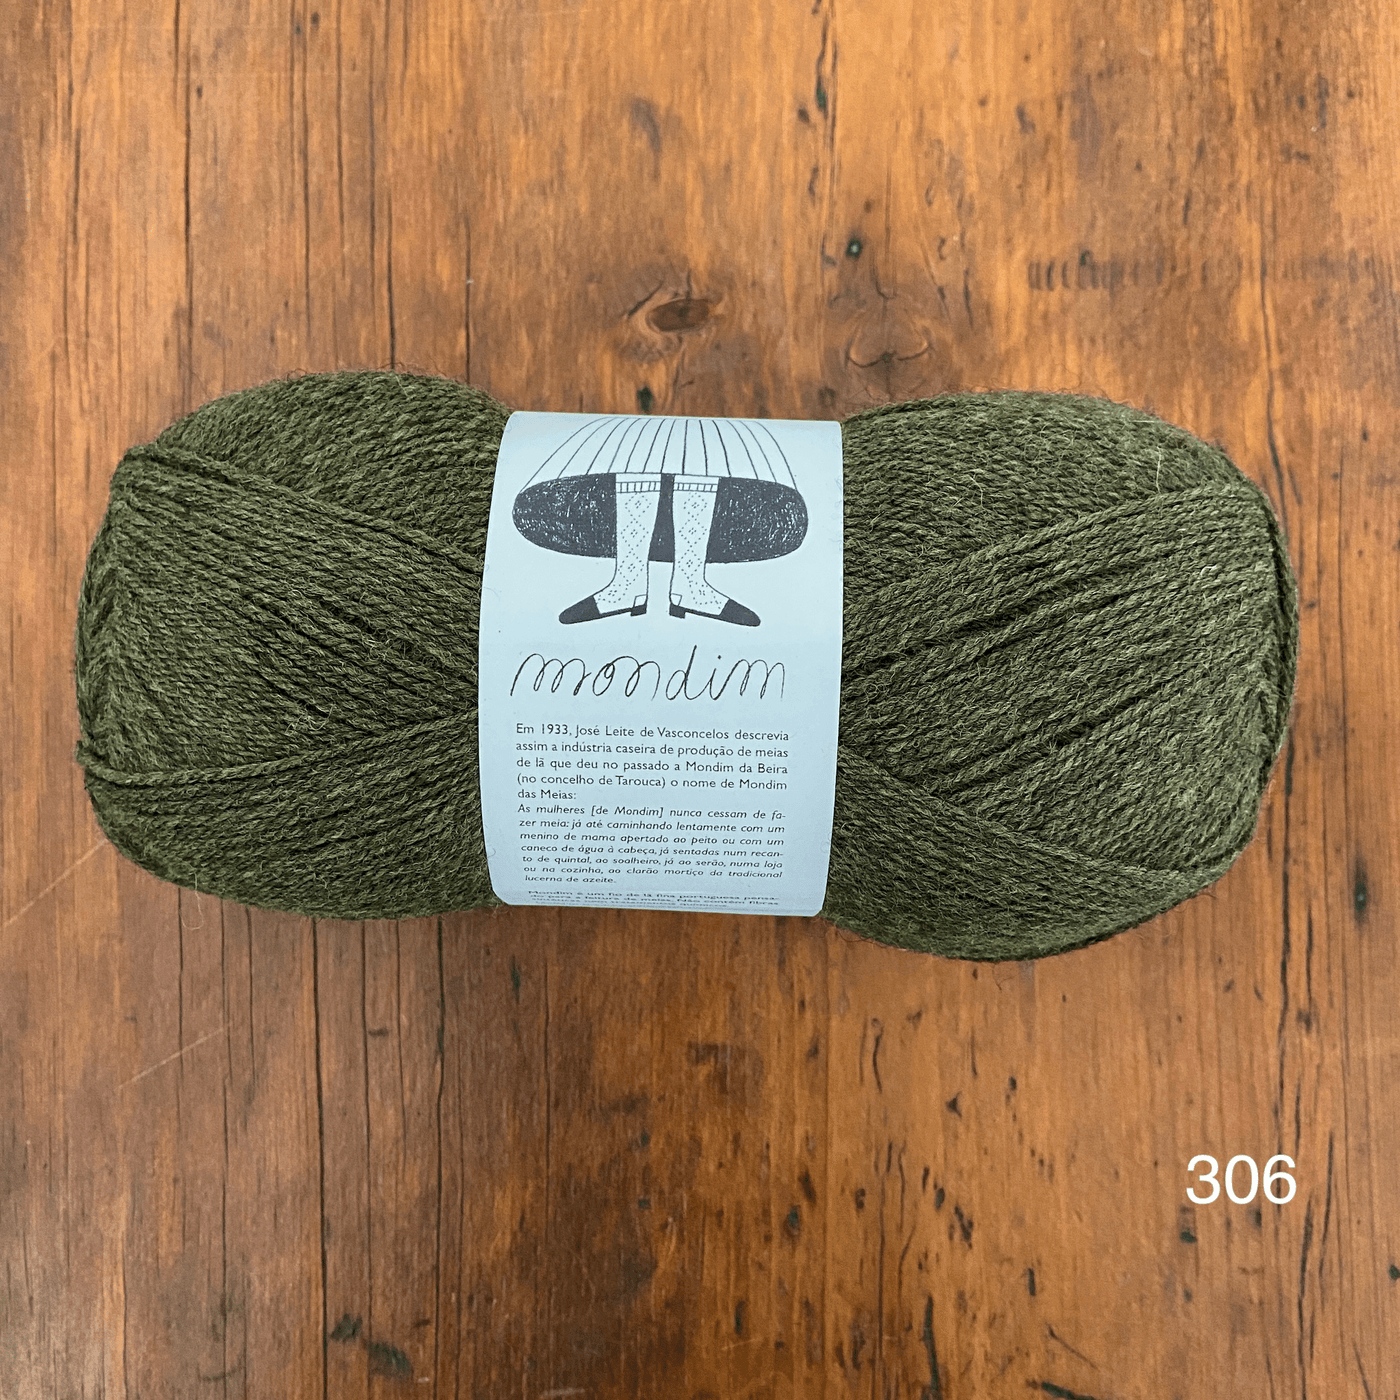 The Woolly Thistle Retrosaria Mondim Fingering Weight Yarn in 306 (green)